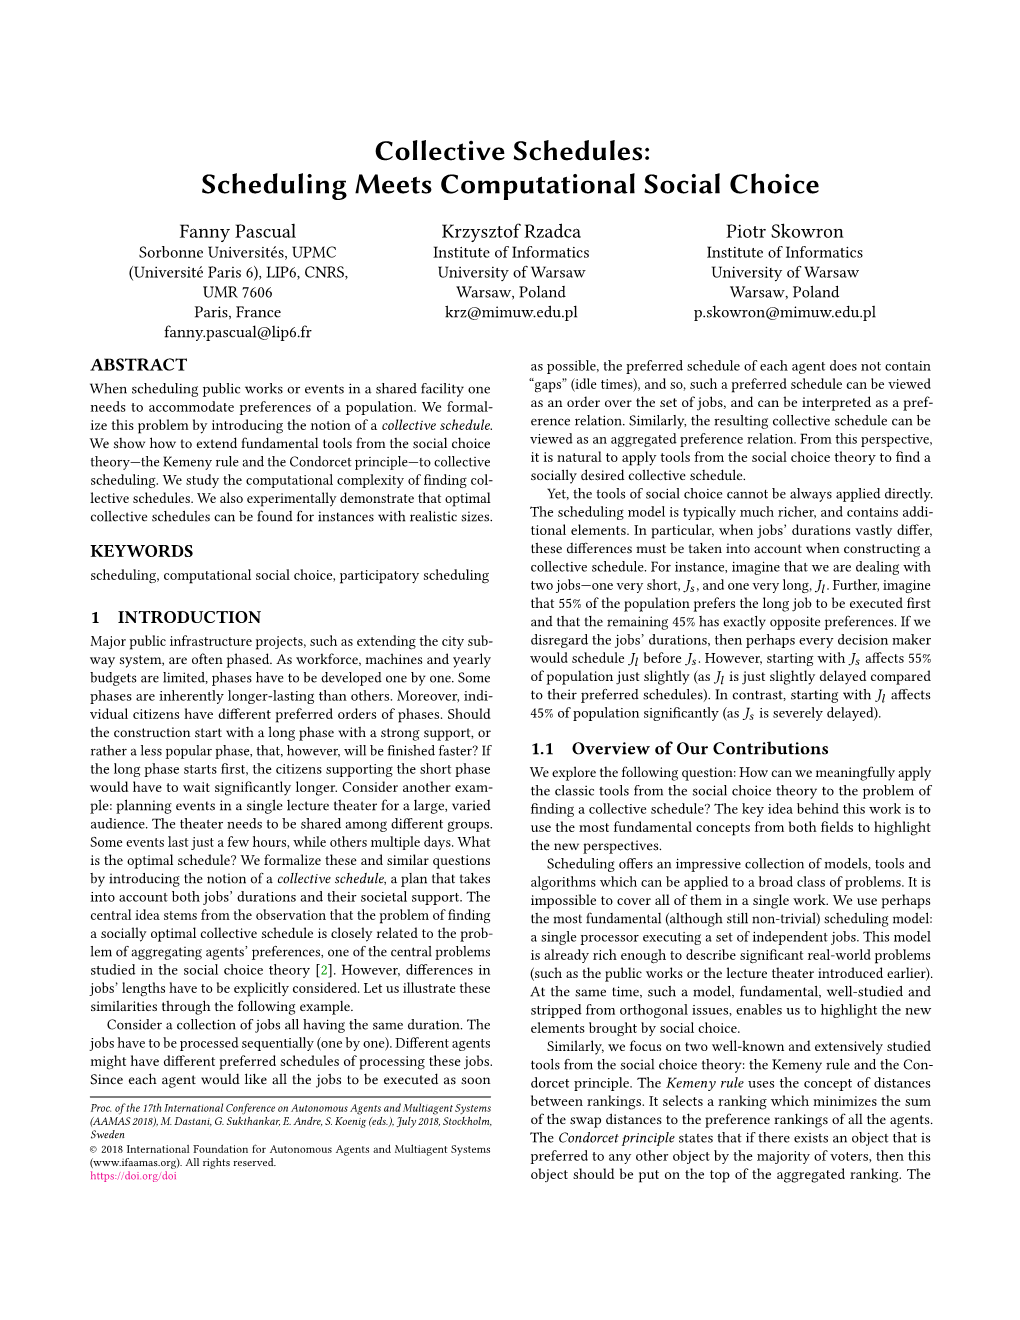 Scheduling Meets Computational Social Choice